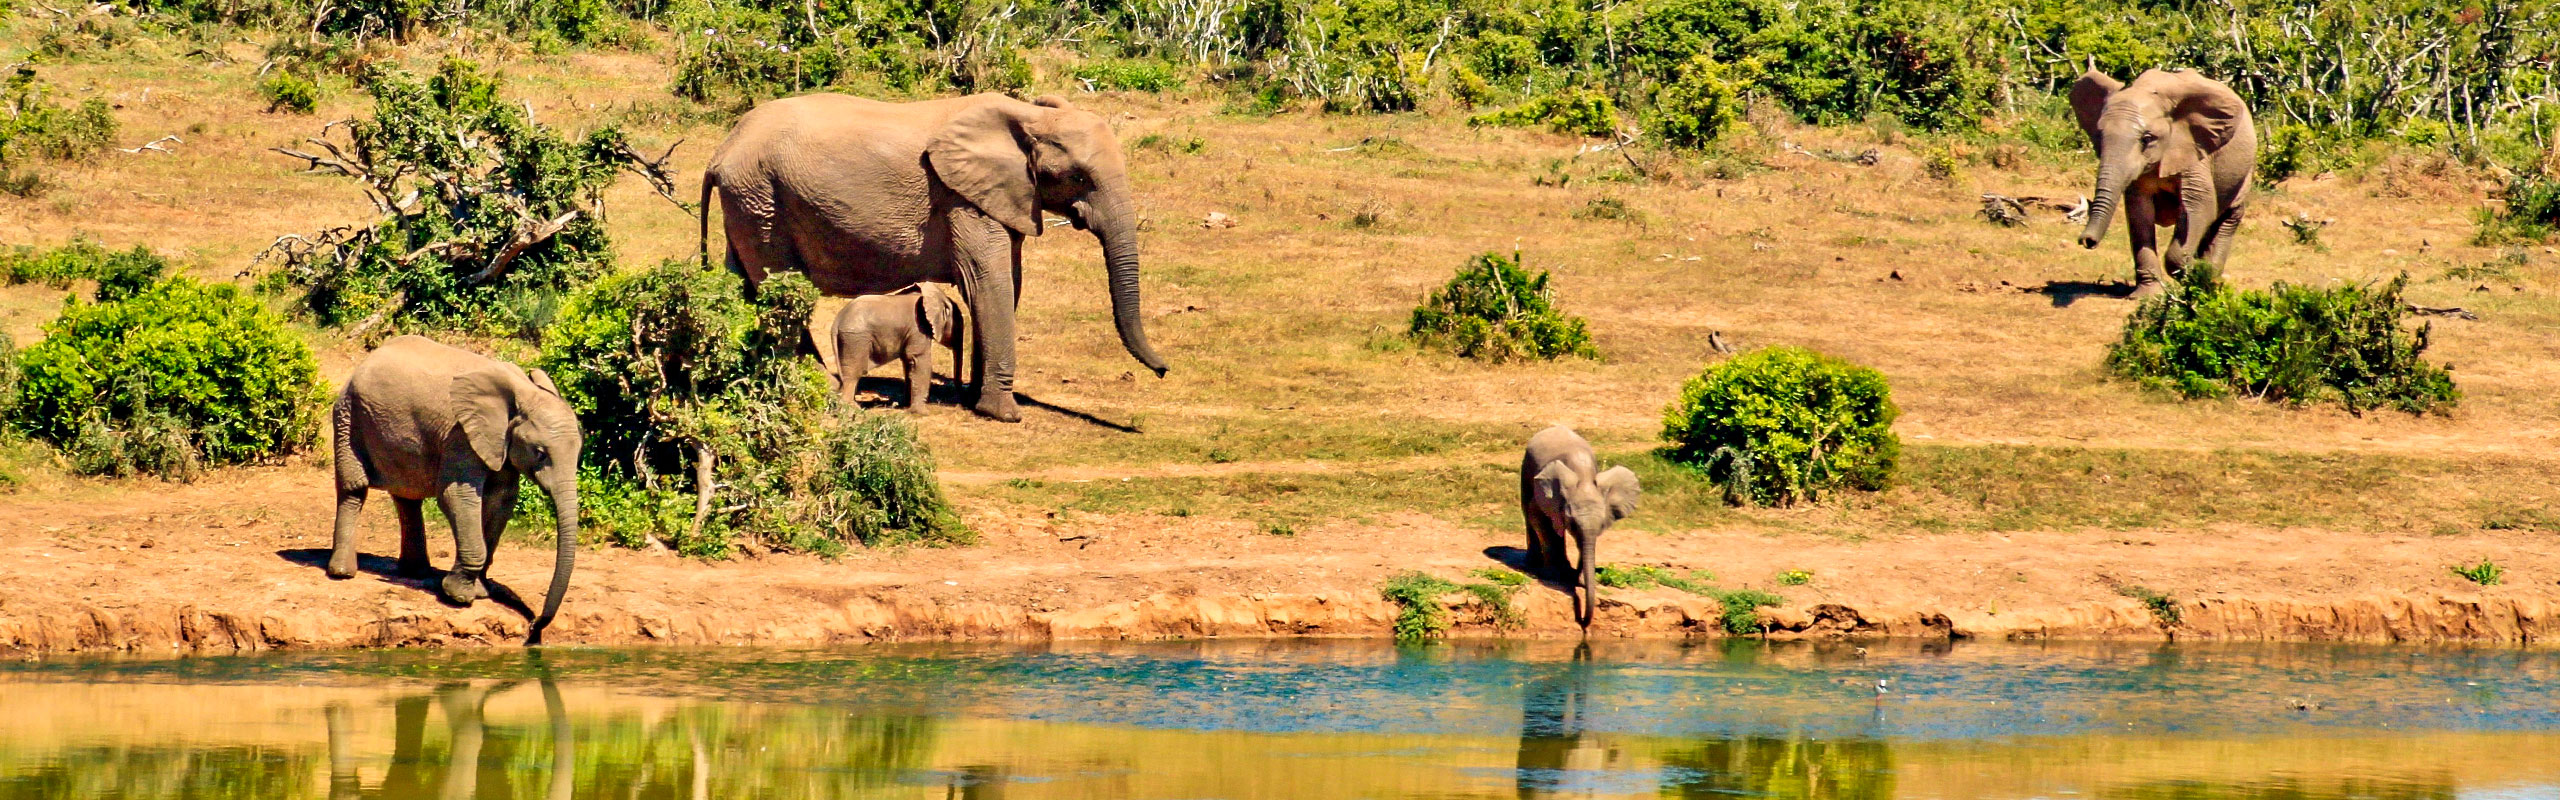 Elephants in Gabon National Park